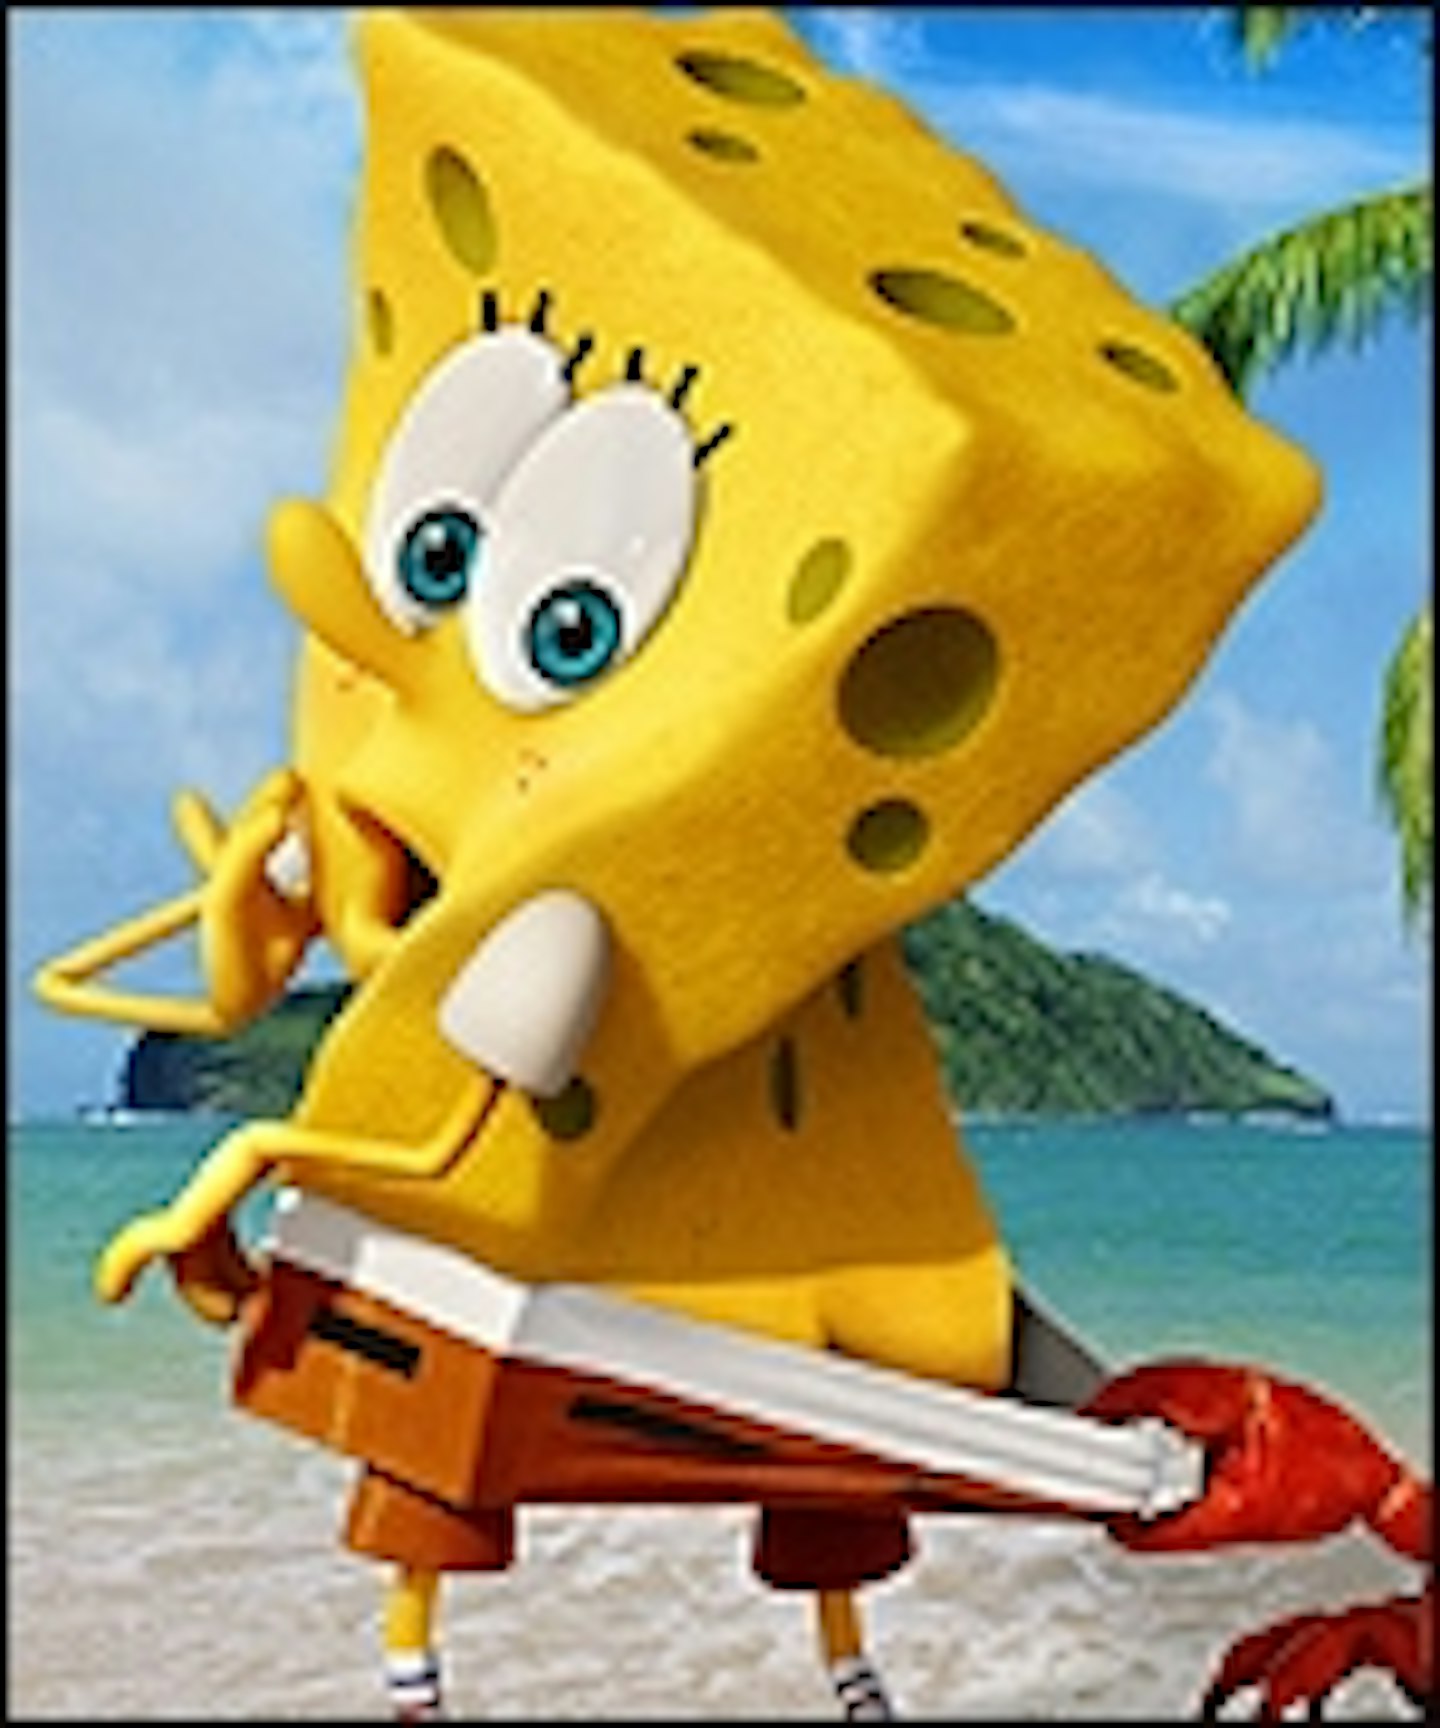 New Spongebob SquarePants Poster Lands